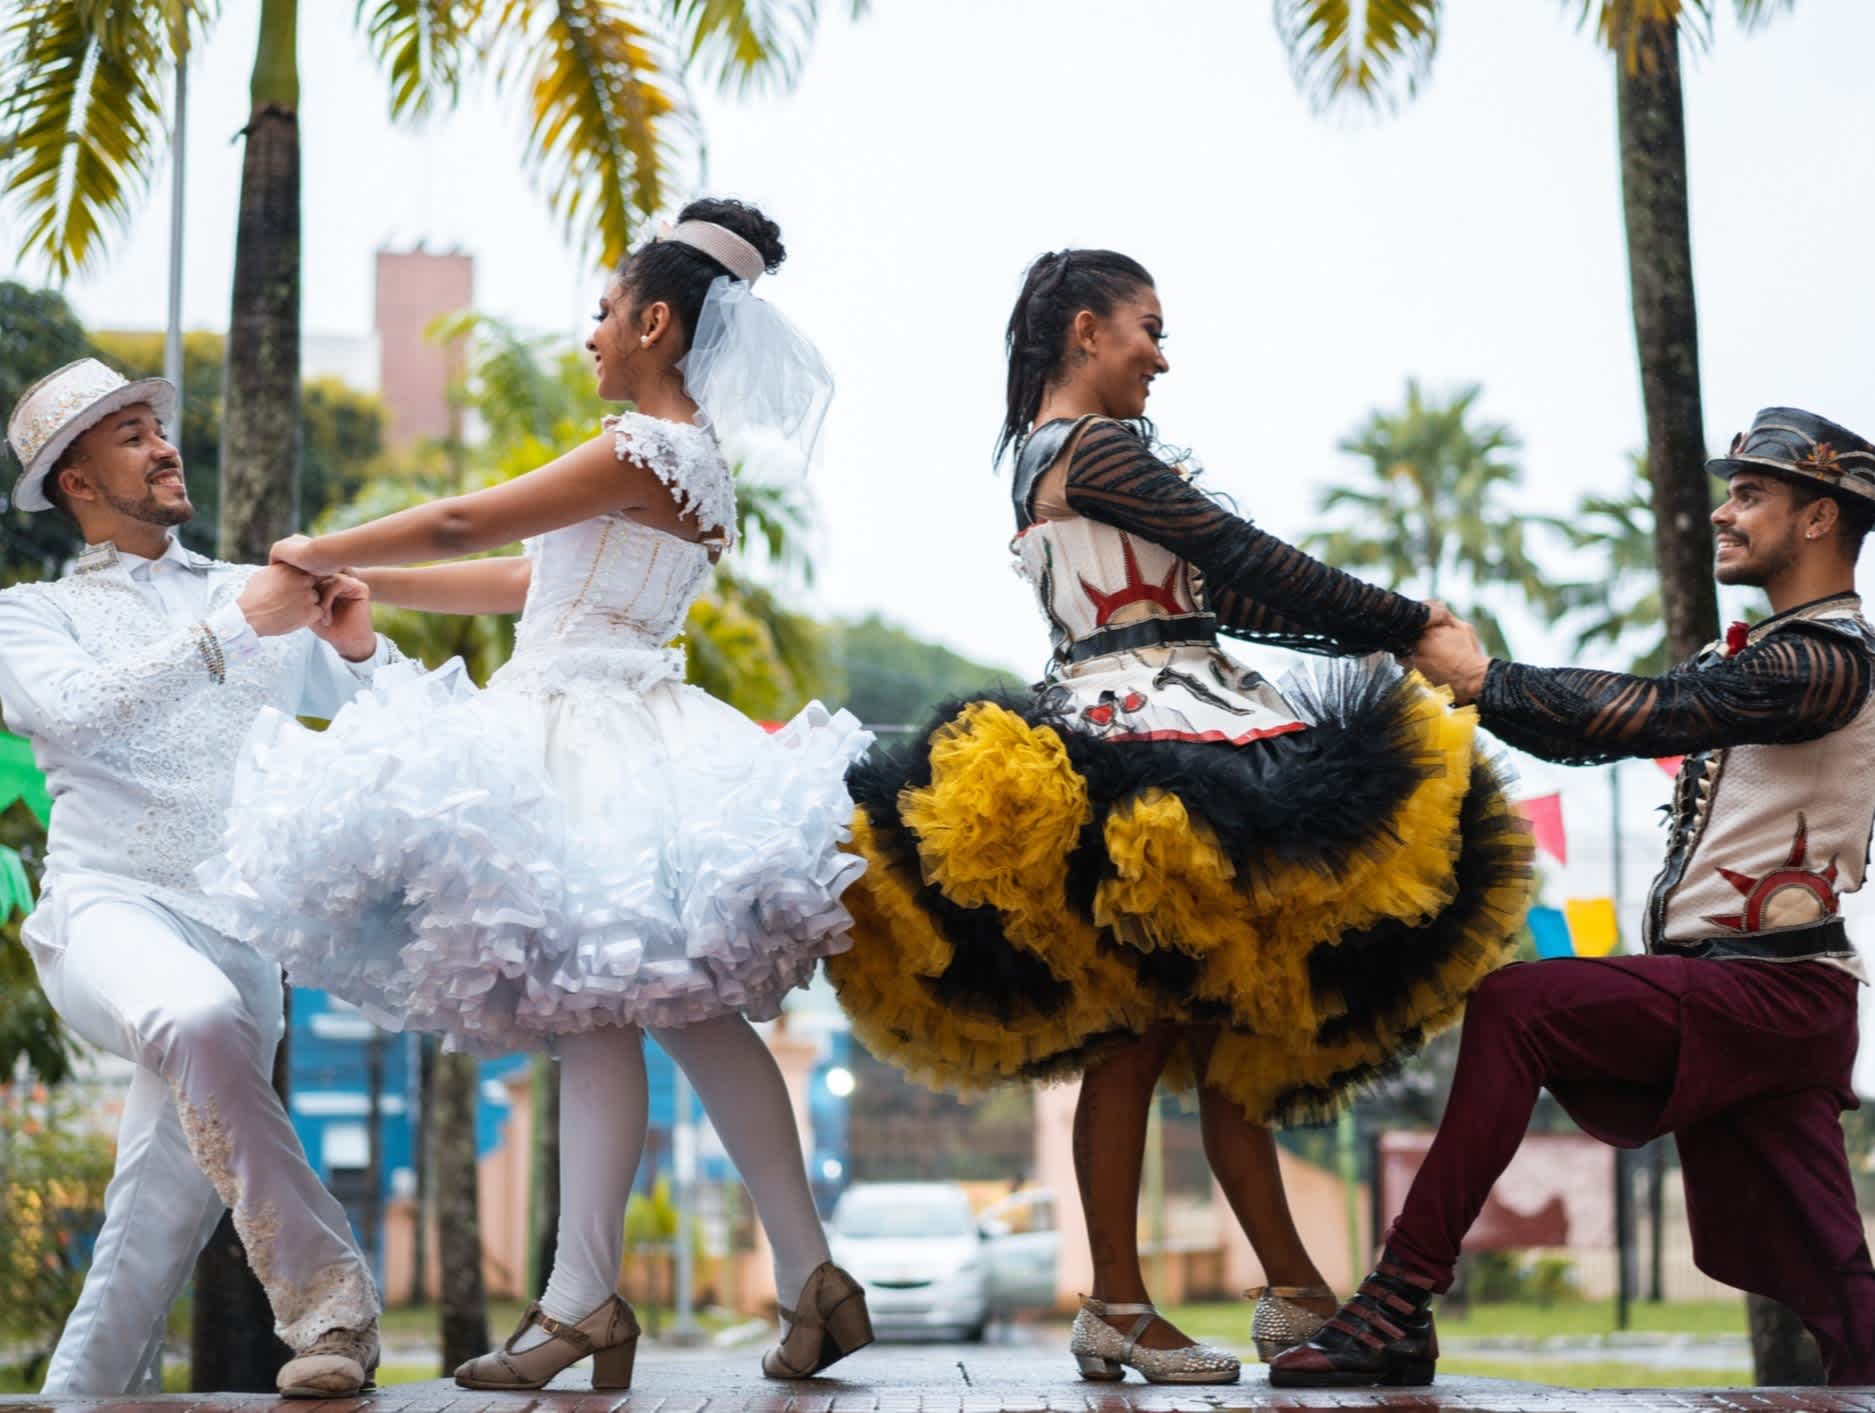 Tänzer am Festa Junina in Rio de Janeiro, Brasilien. 

